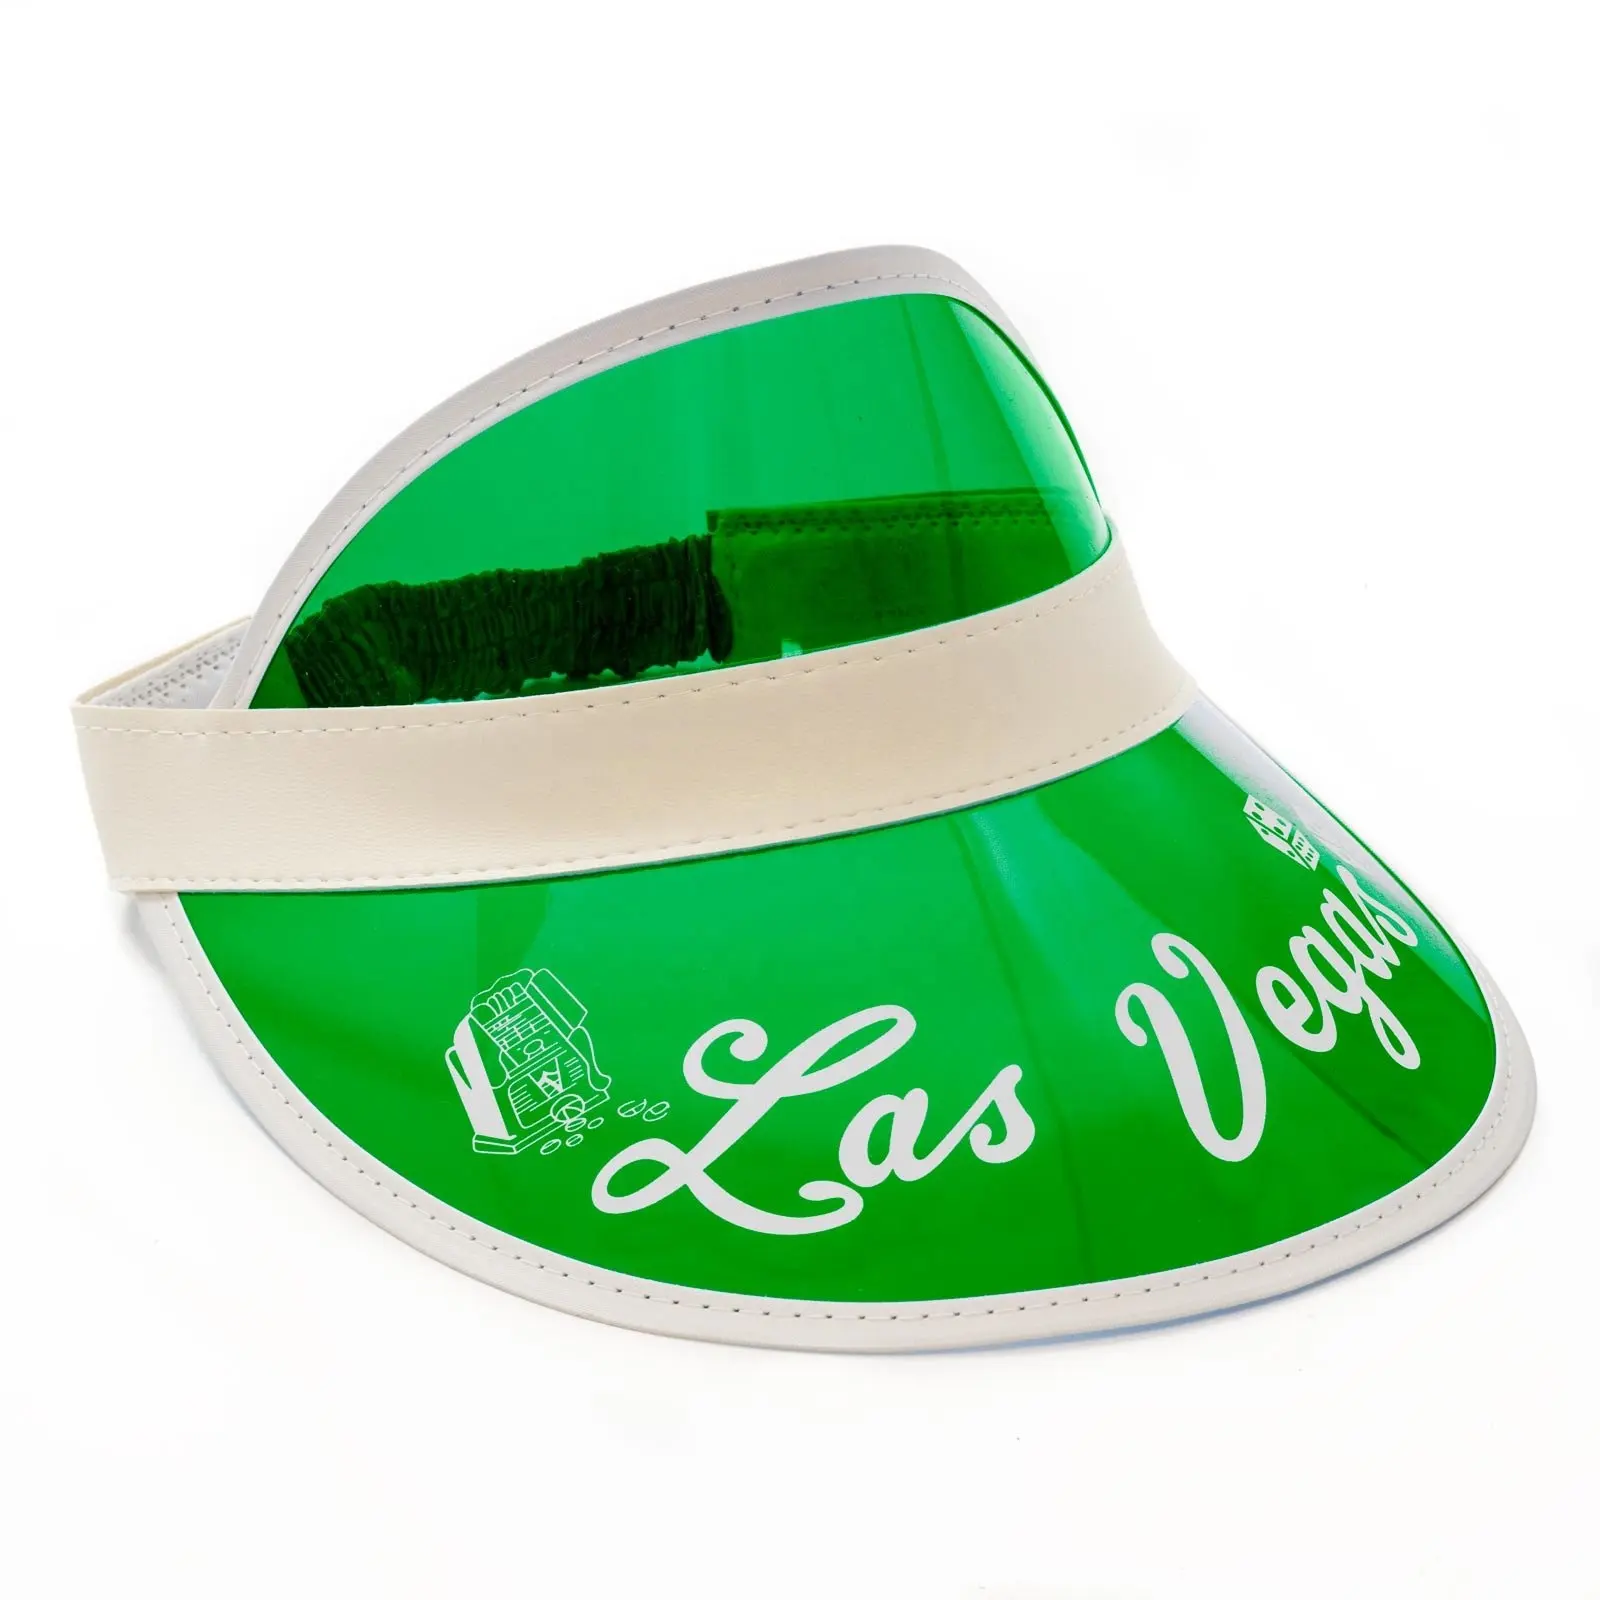 All'ingrosso della fabbrica di plastica visiera parasole Las Vegas verde Dealer visiere